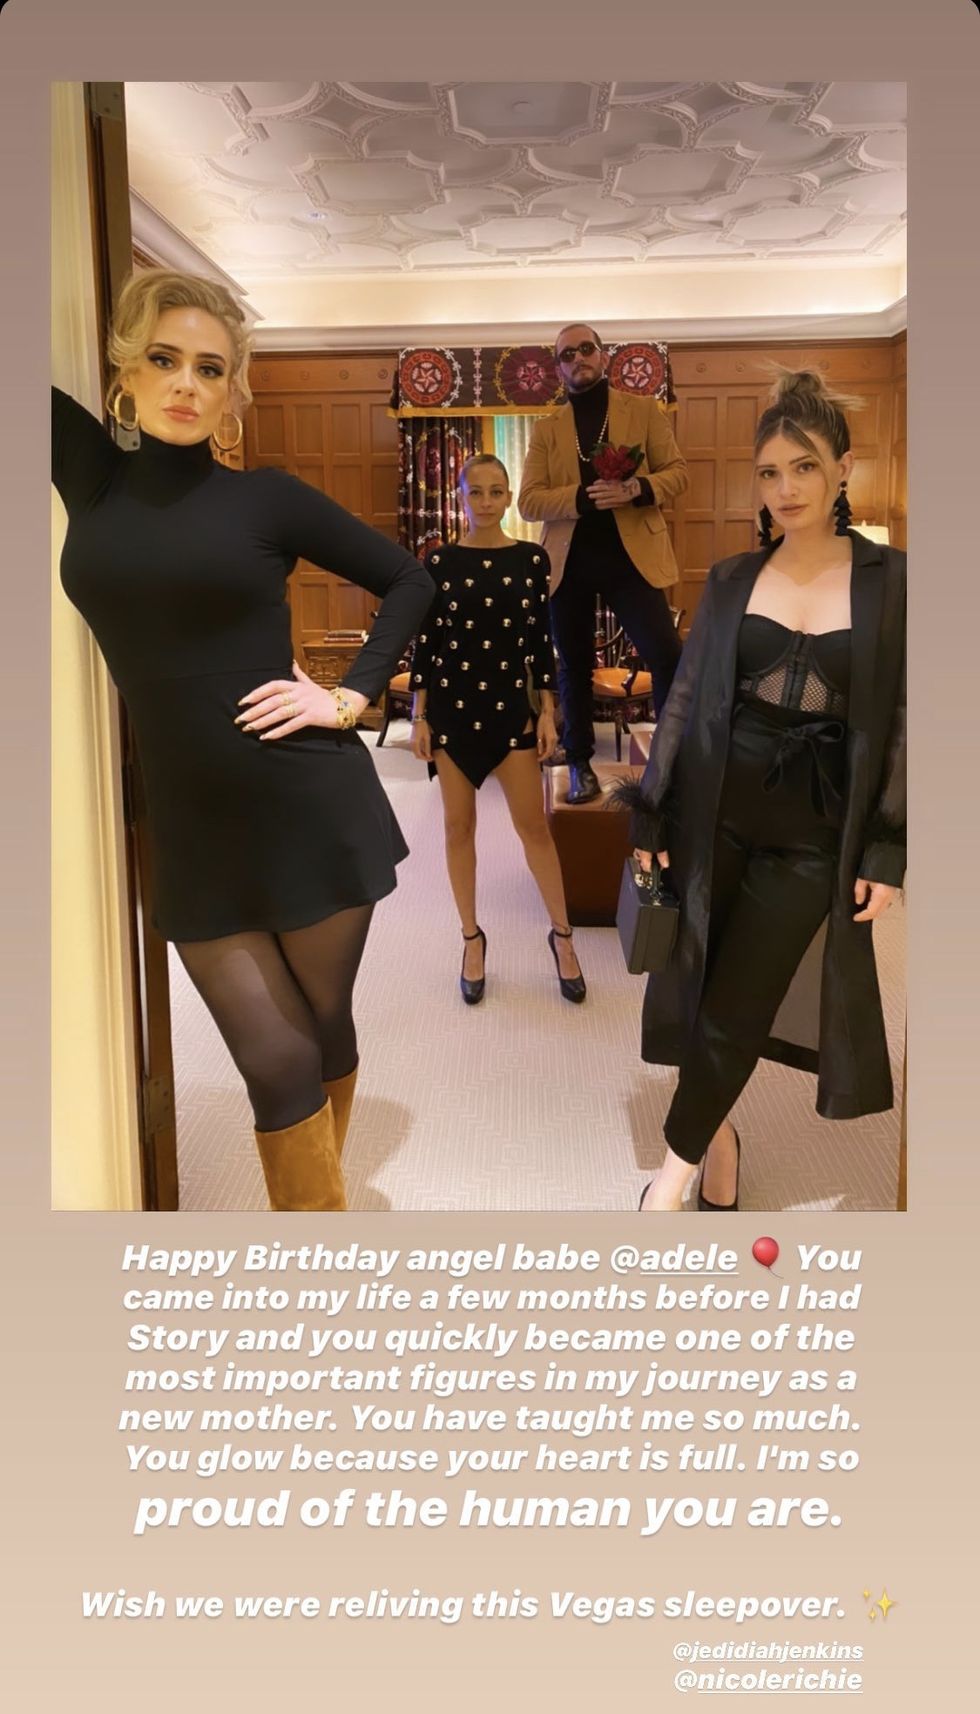 adele's friend wishes her a happy birthday